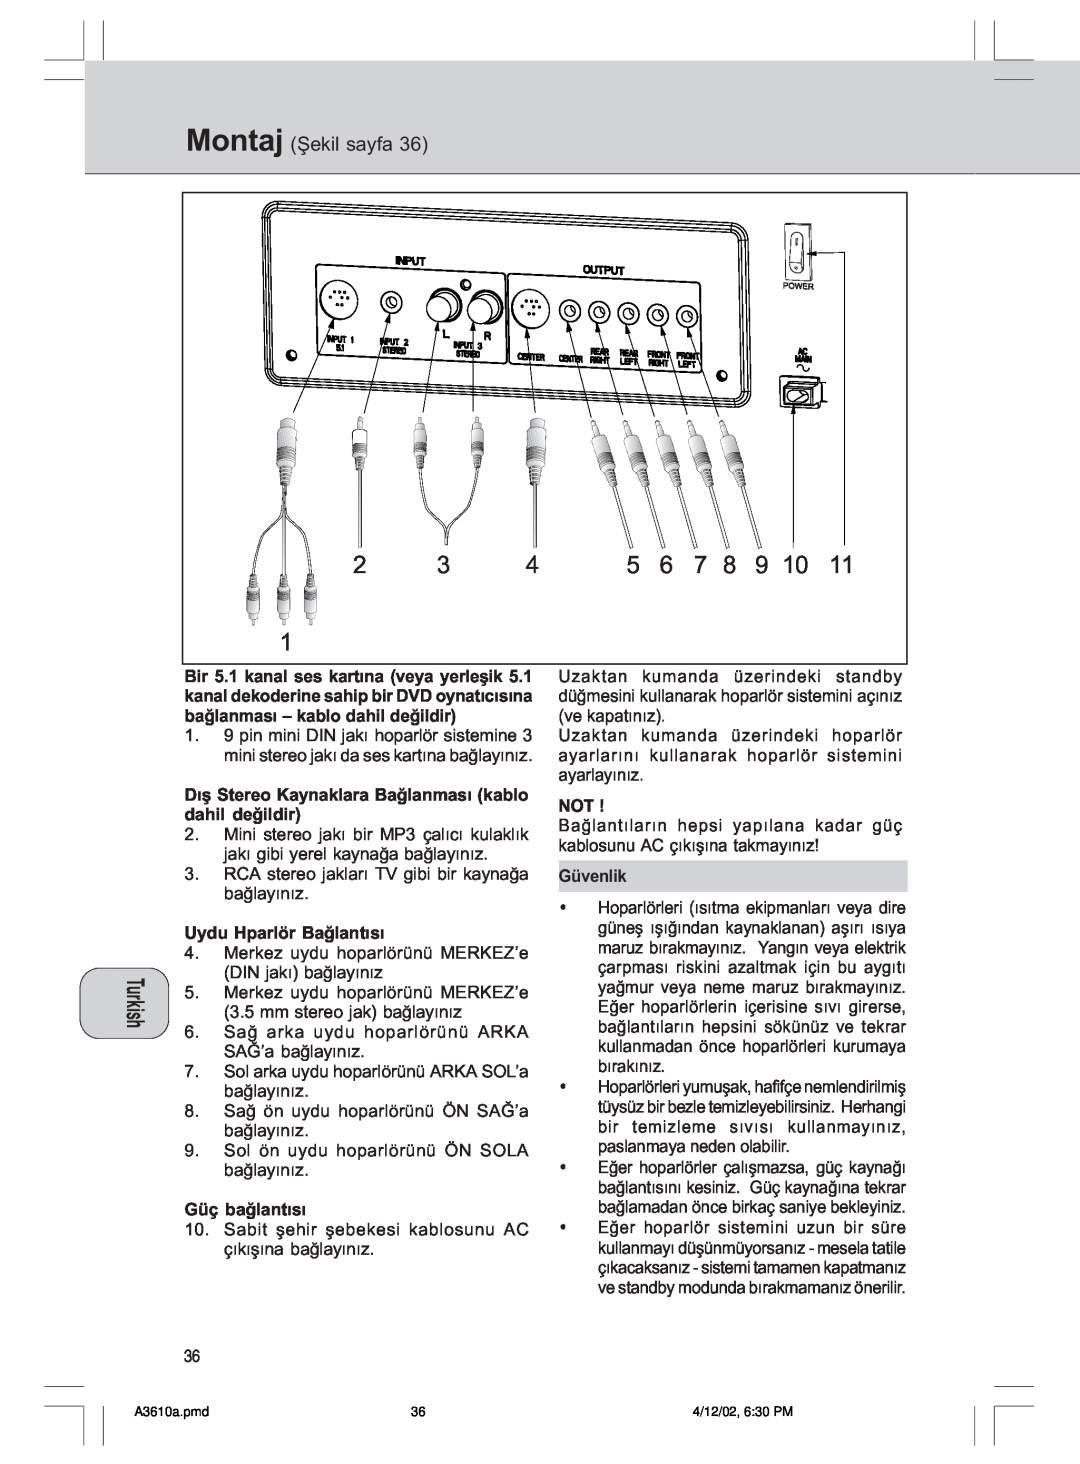 Philips A3.610, MMS316 manual Montaj ﬁekil sayfa 